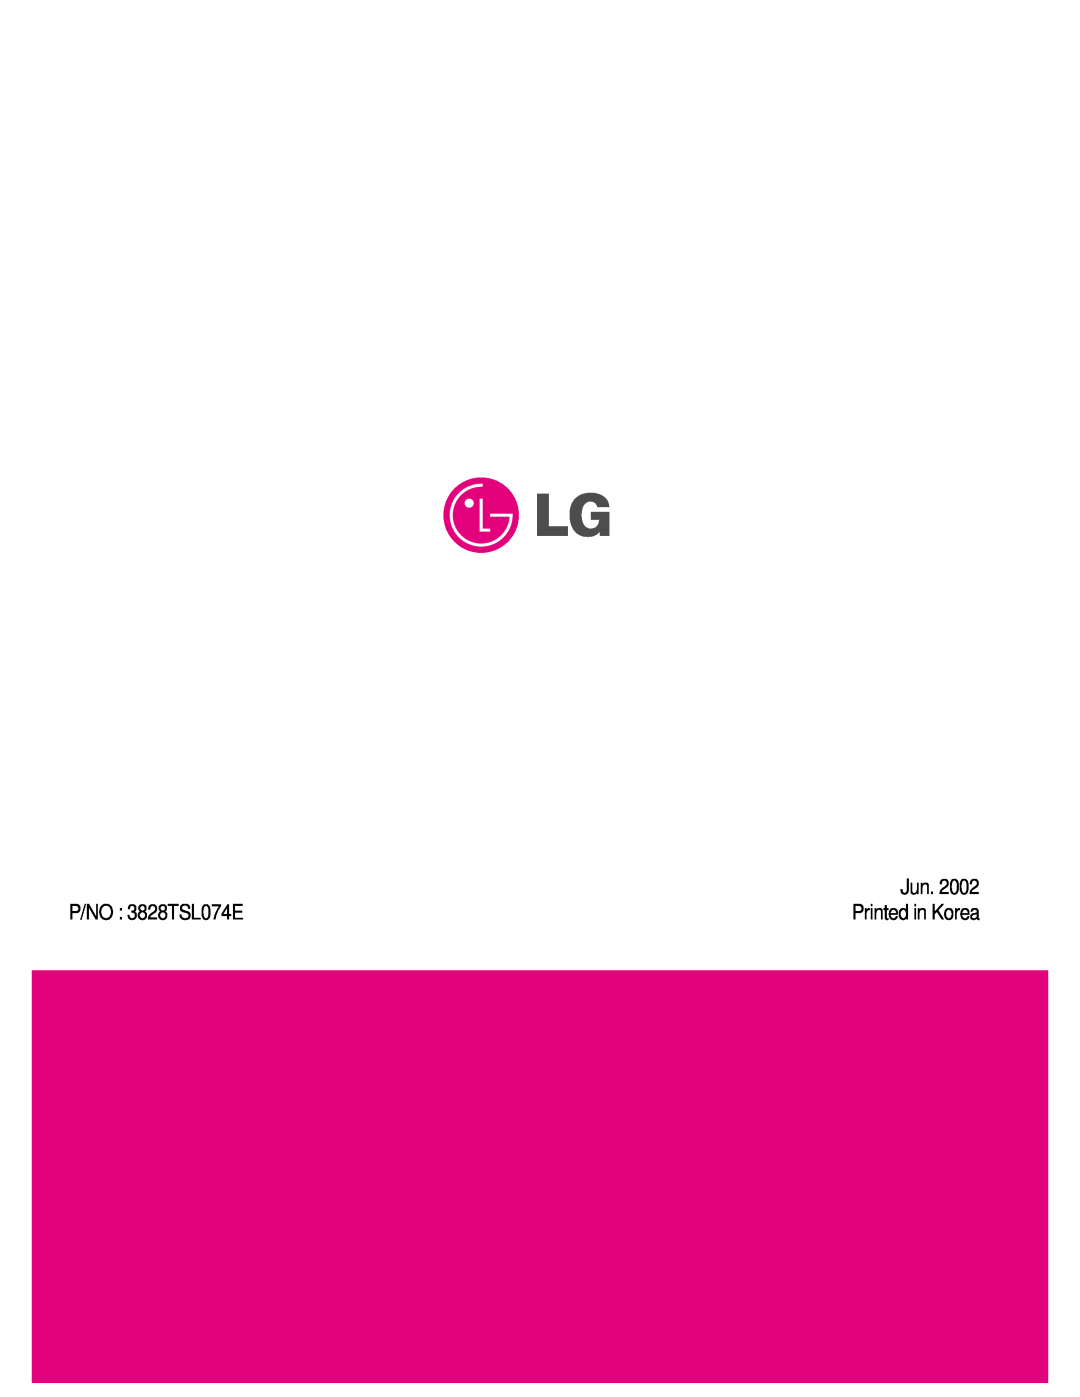 LG Electronics LCD 782LS service manual P/NO 3828TSL074E, Printed in Korea 